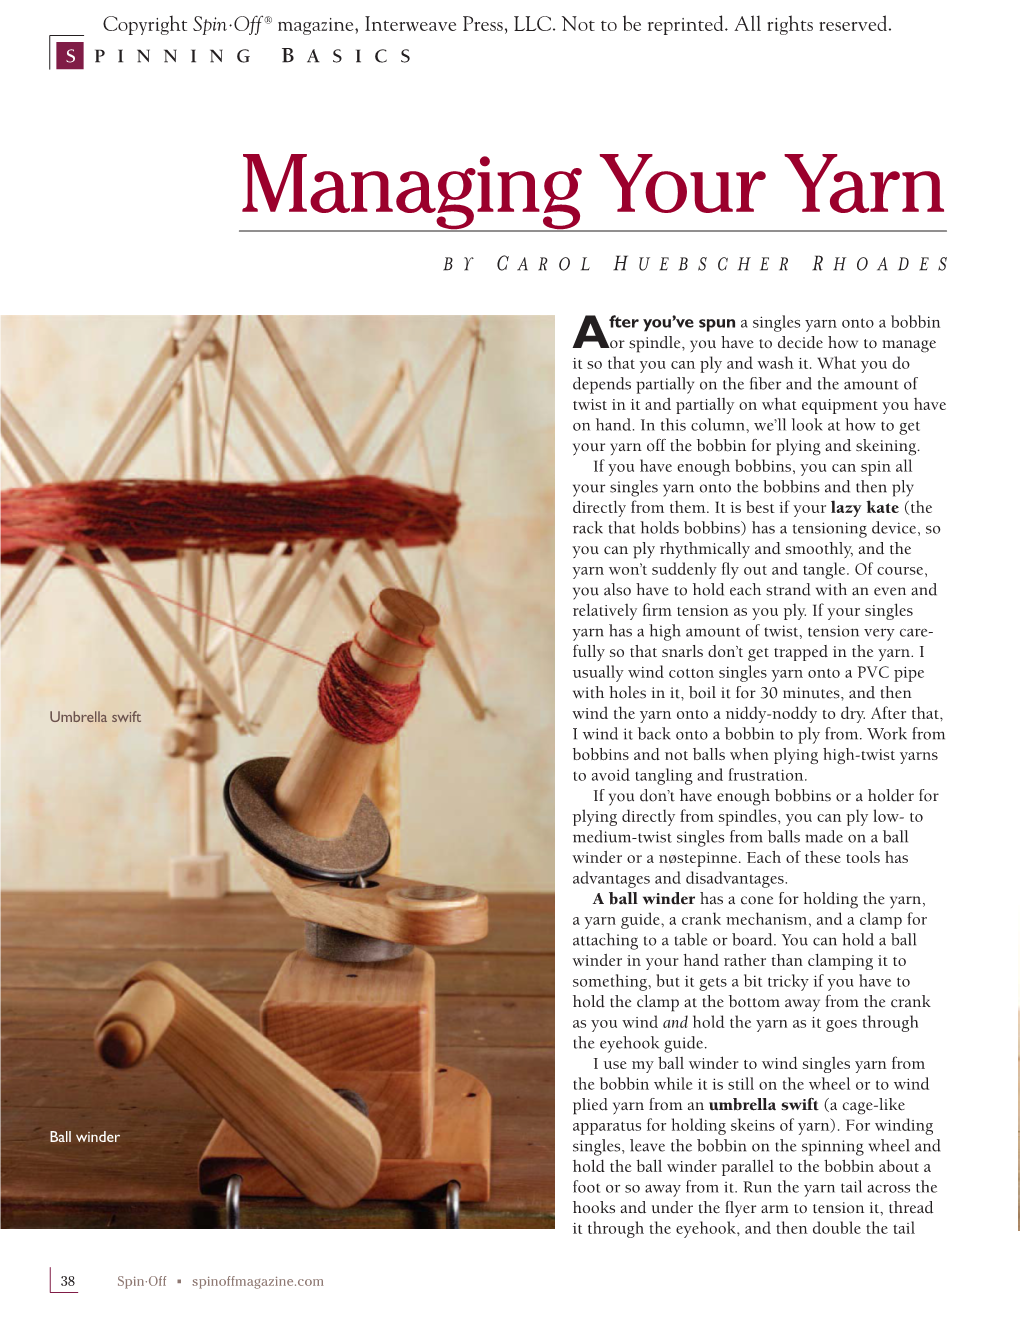 Managing Your Yarn by C AROL H UEBSCHER R HOADES